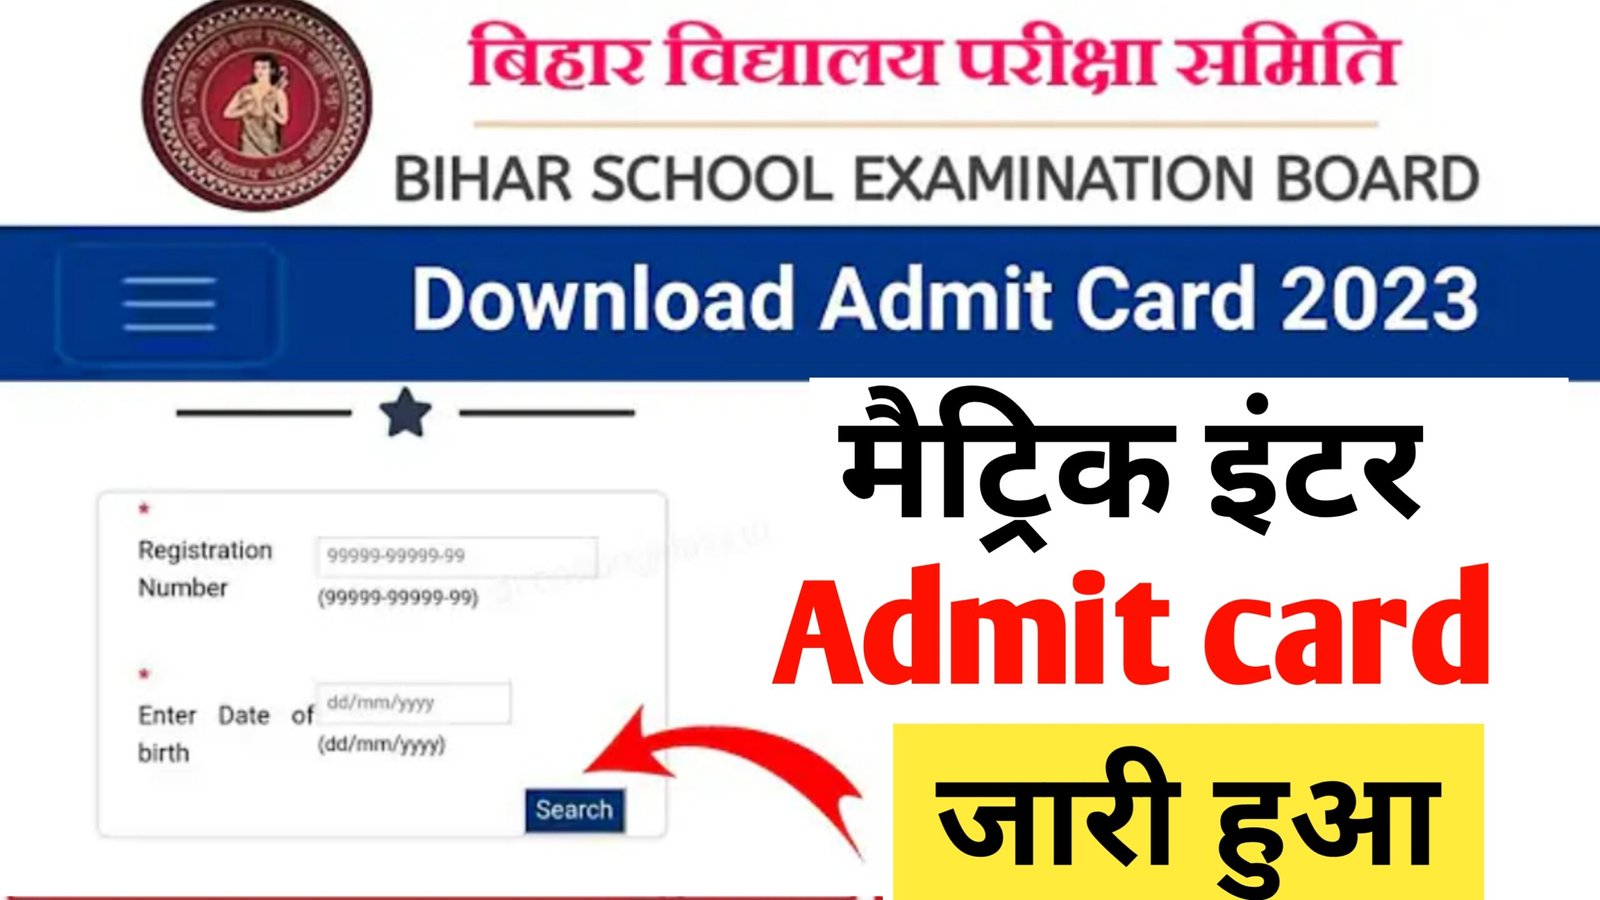 Bihar board 10th 12th admit card download 